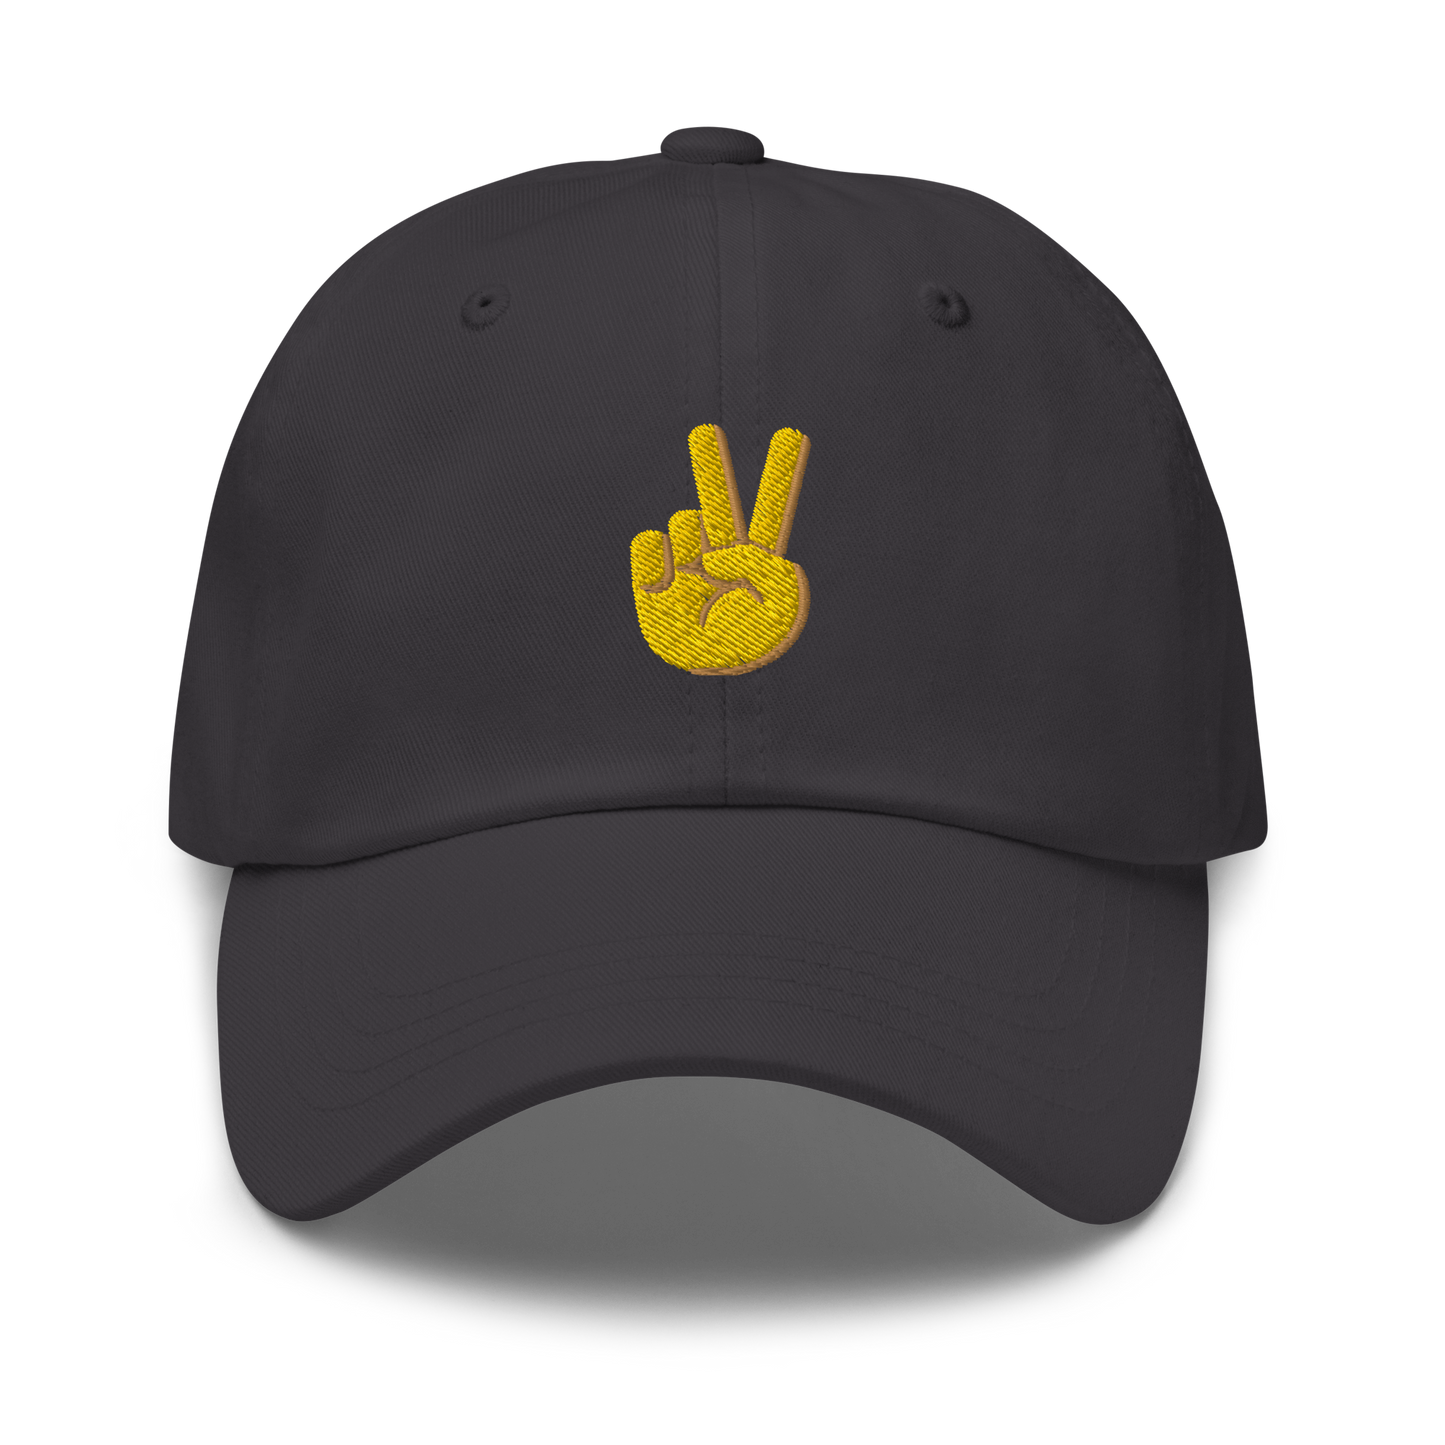 Peace hat